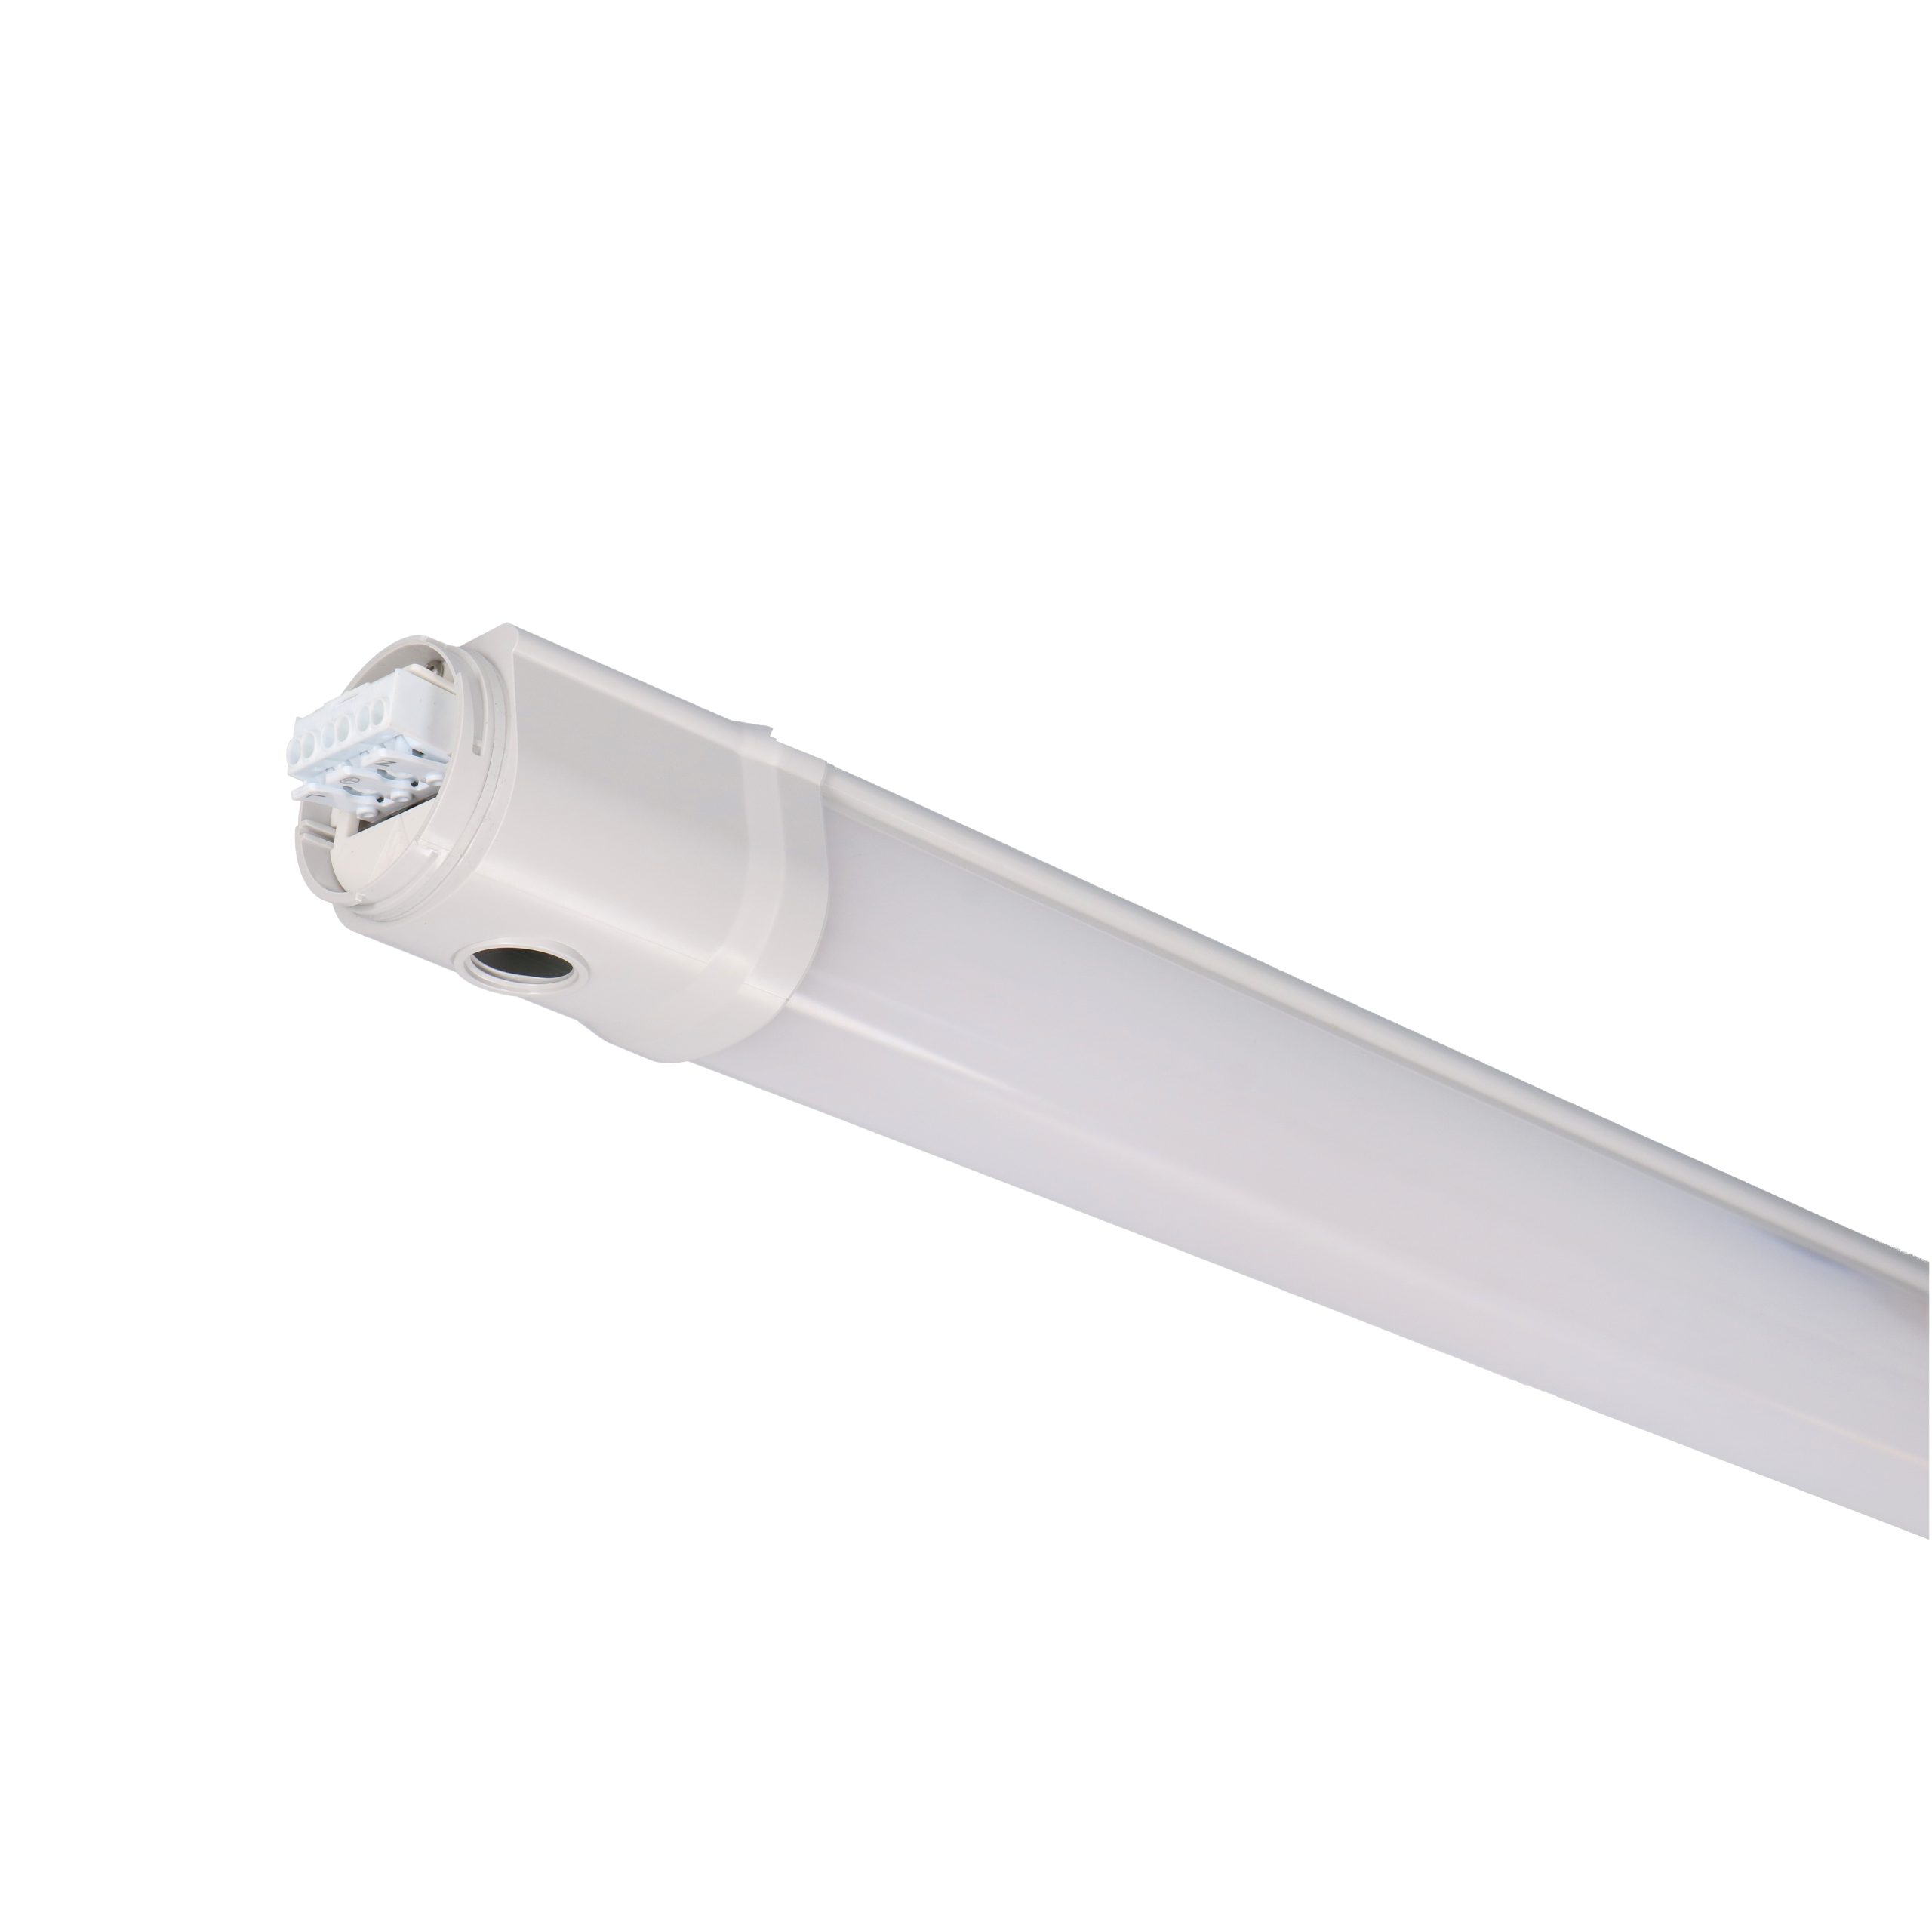 LED's light PRO LED Deckenleuchte LED-Feuchtraumleuchte, 40W IP65 2400295 neutralweiß durchverdrahtet modular 150cm LED